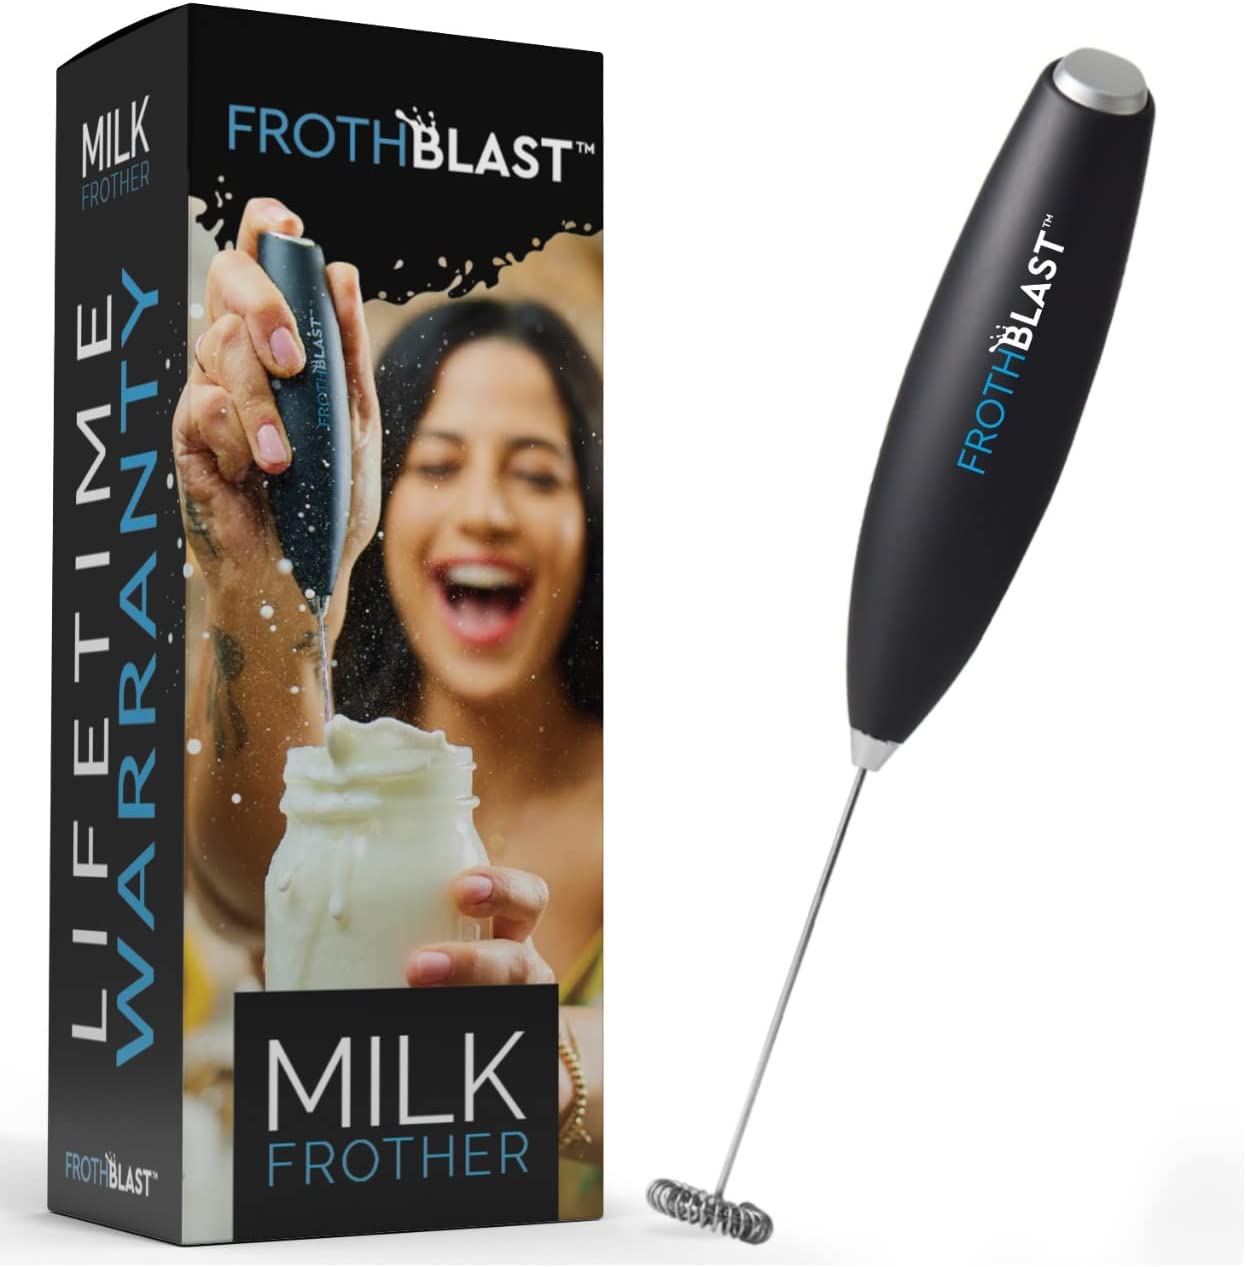 https://www.dontwasteyourmoney.com/wp-content/uploads/2022/07/frothblast-handheld-compact-milk-frother-for-lattes-milk-frother-for-latte.jpg